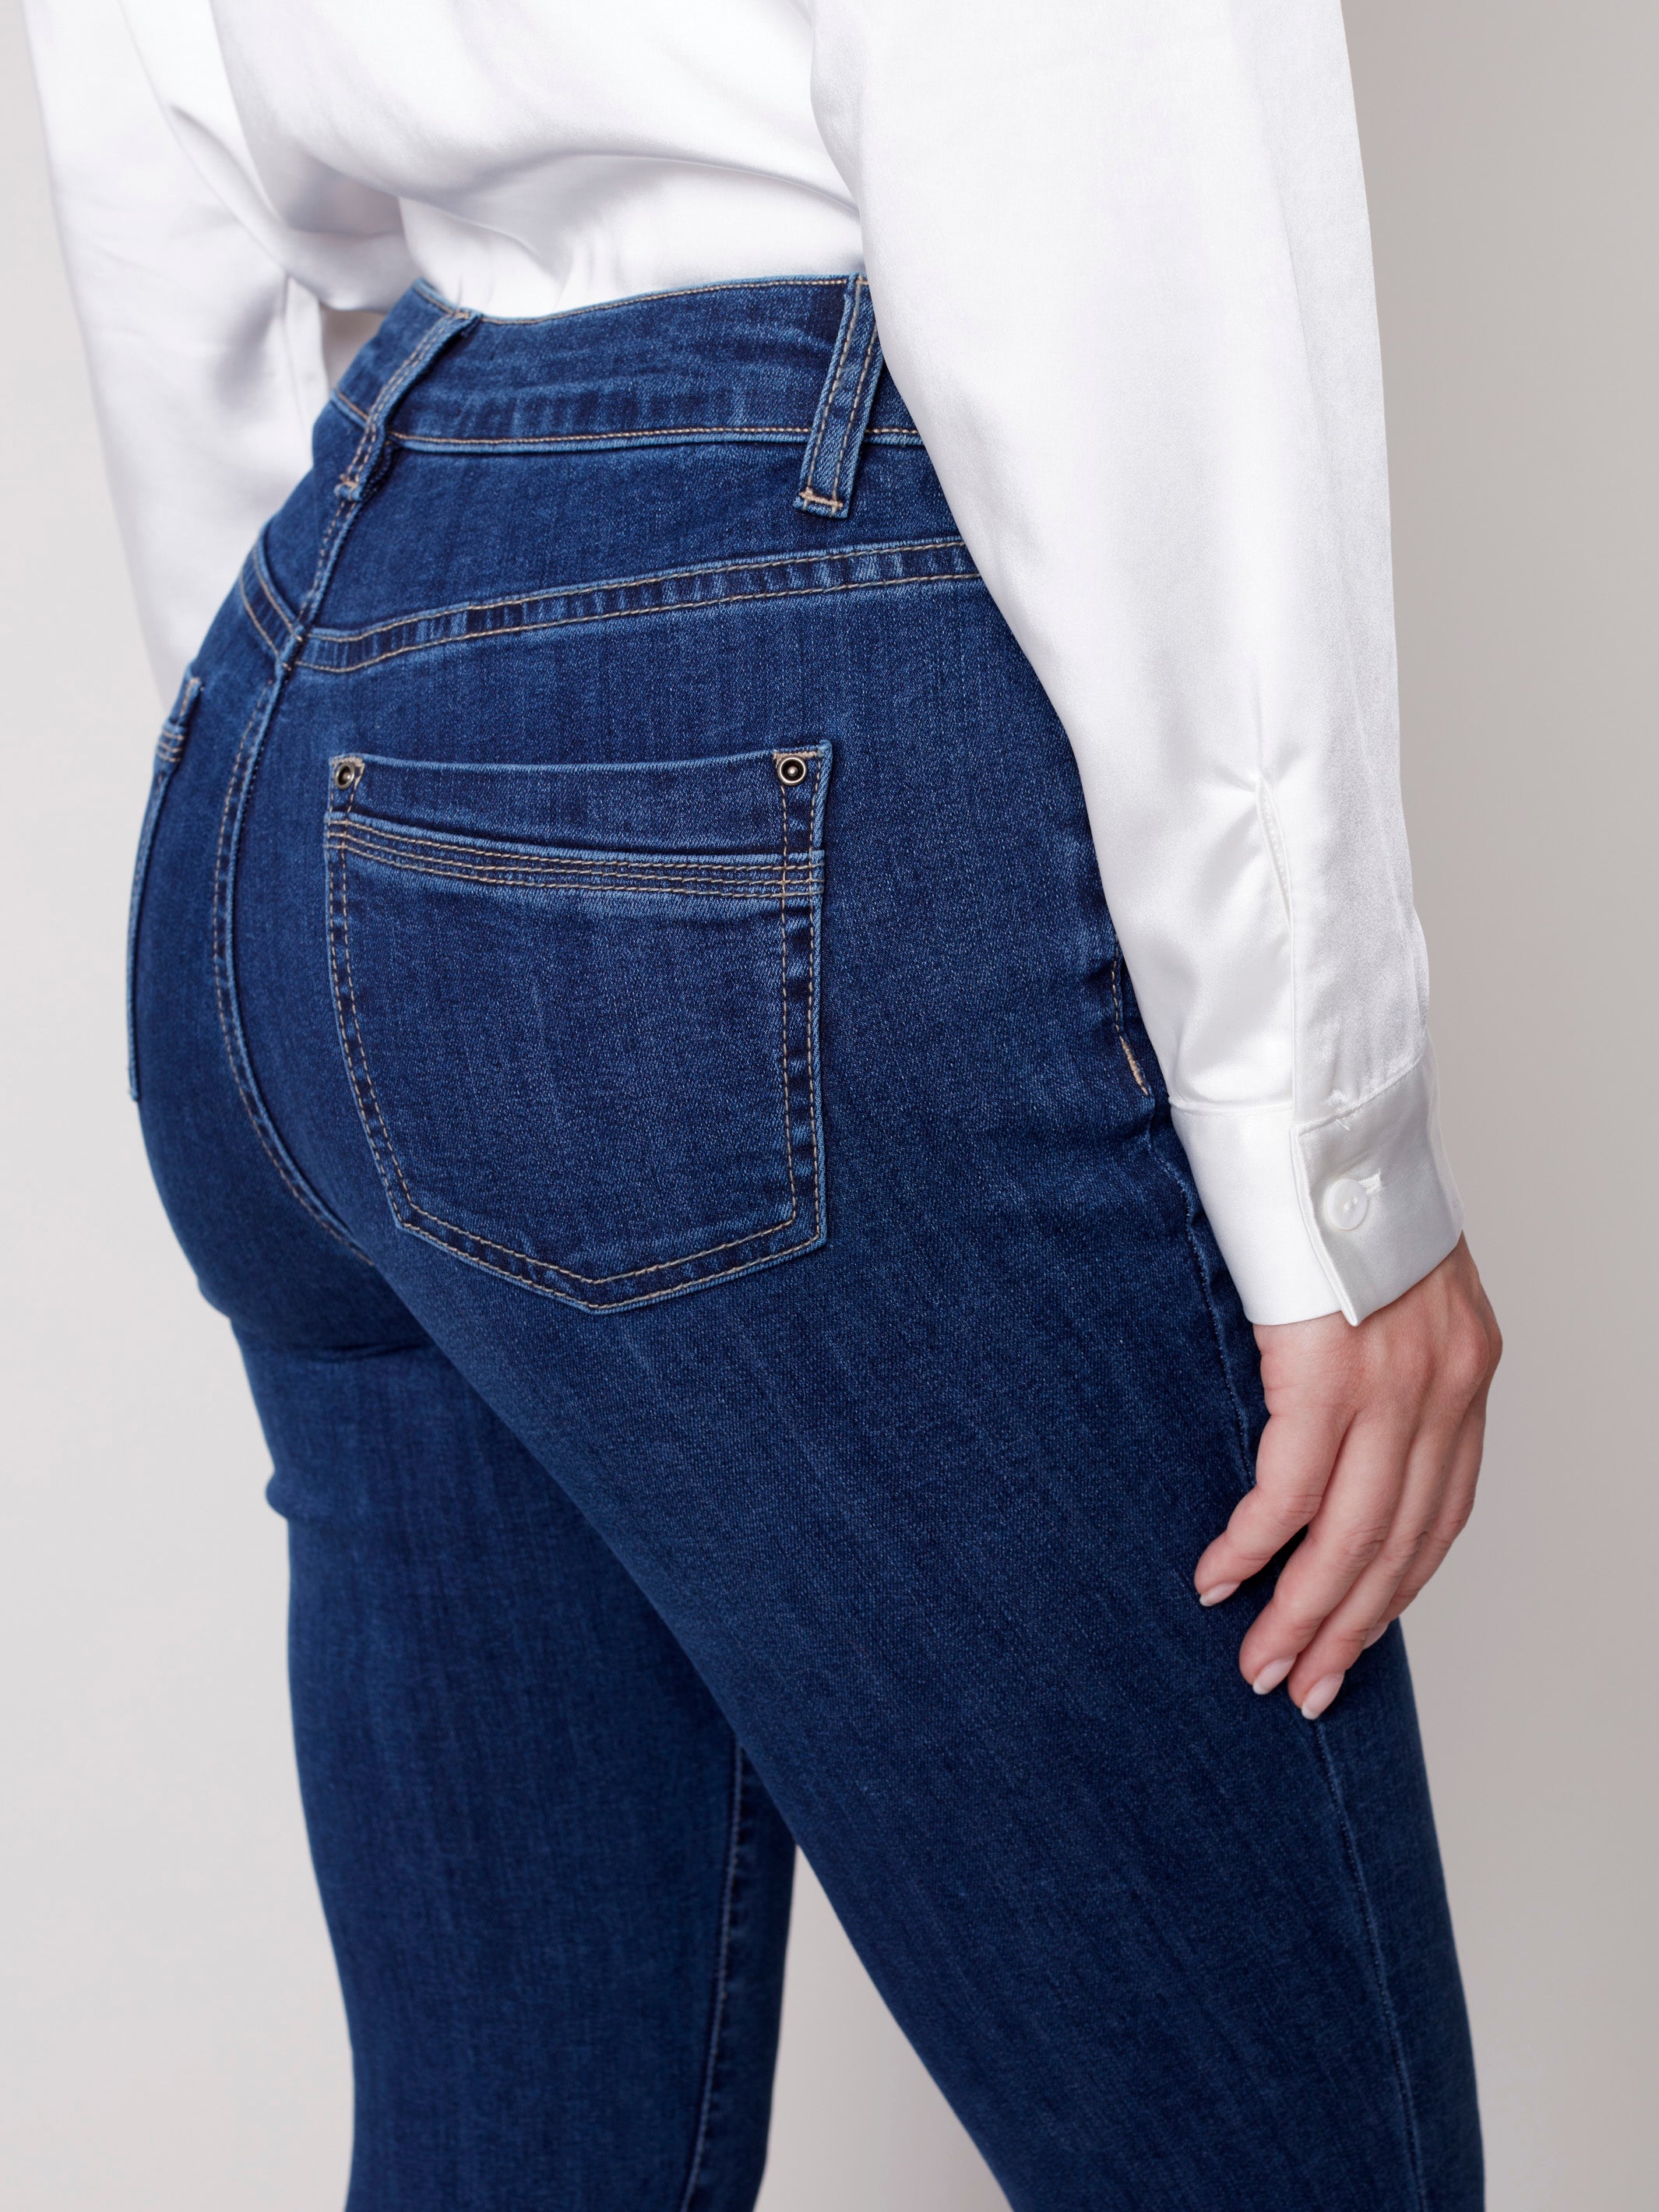 Jeans with Side Zipper - Indigo